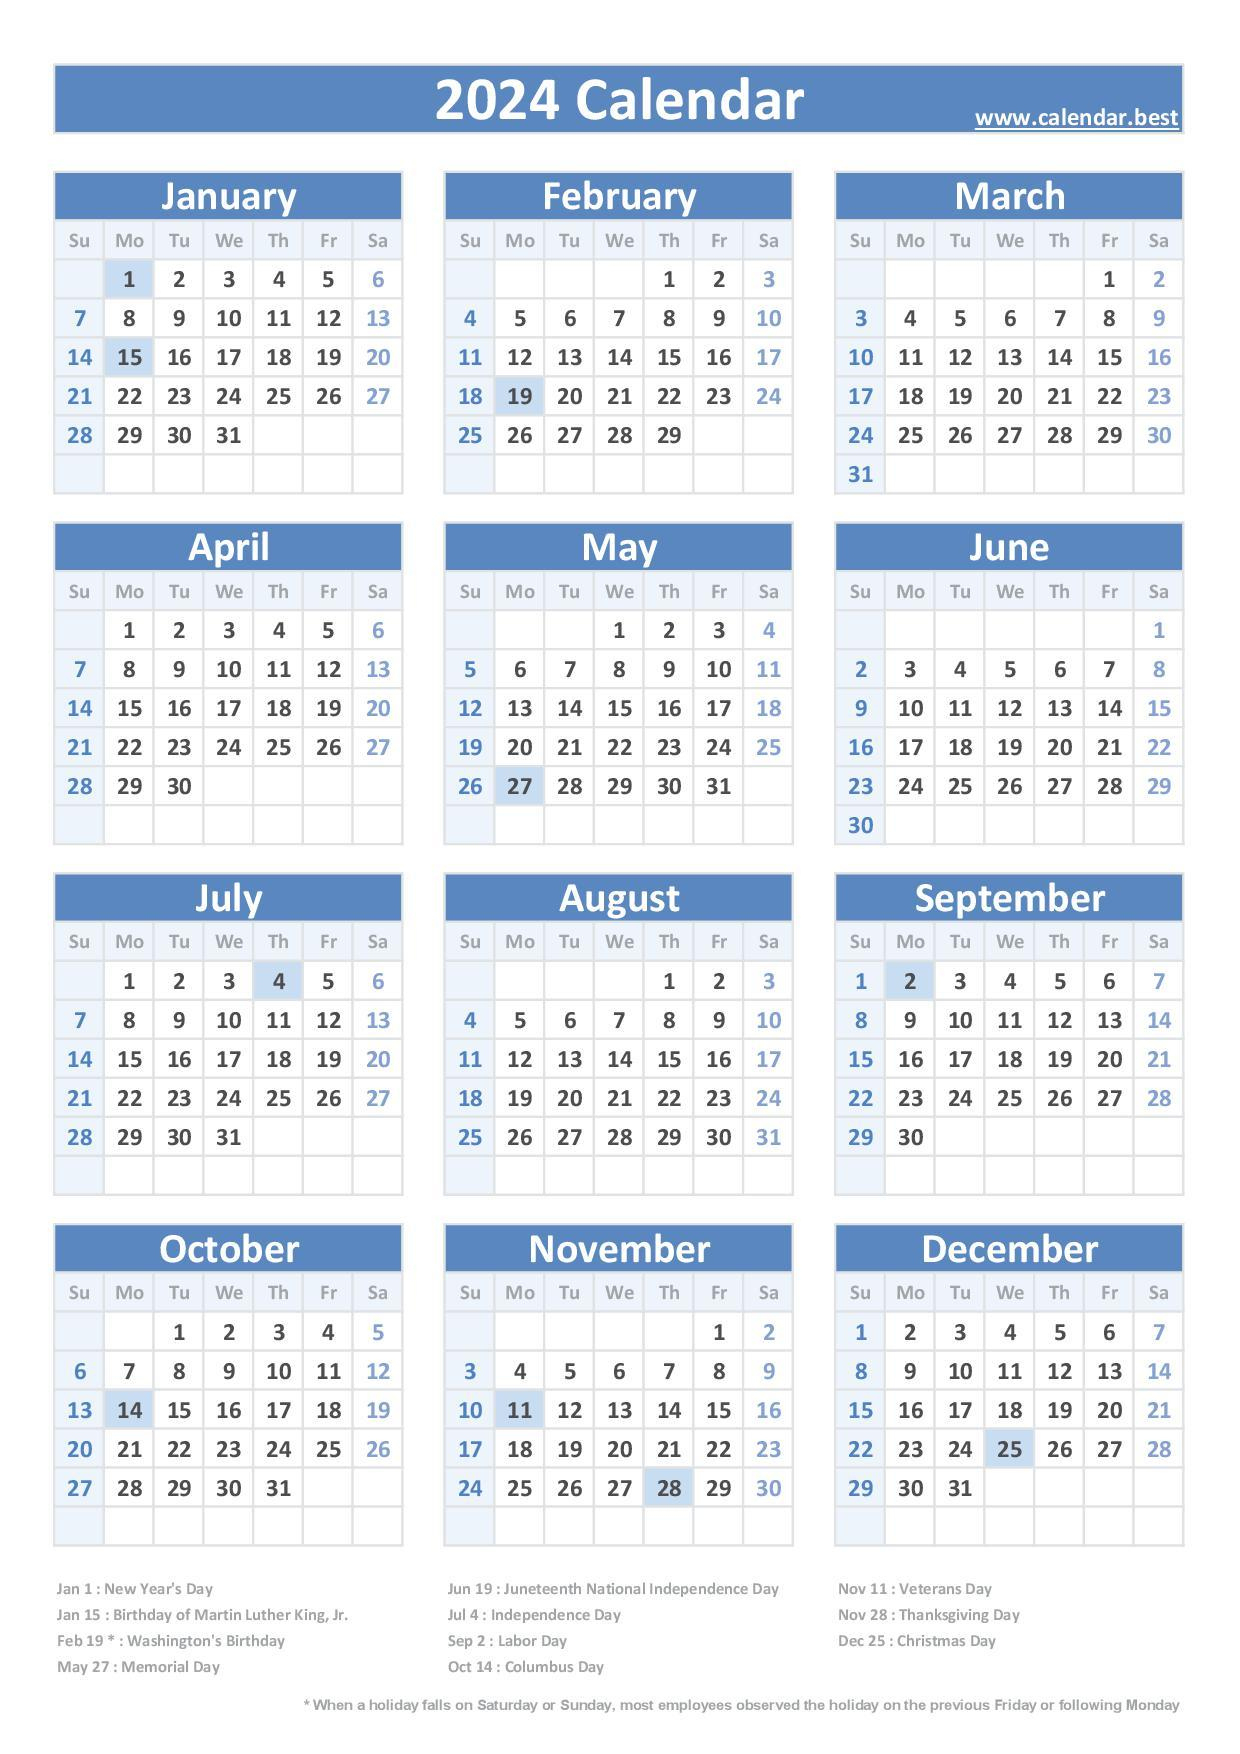 2024 Calendar With Holidays (Us Federal Holidays) |  Calendar 2024